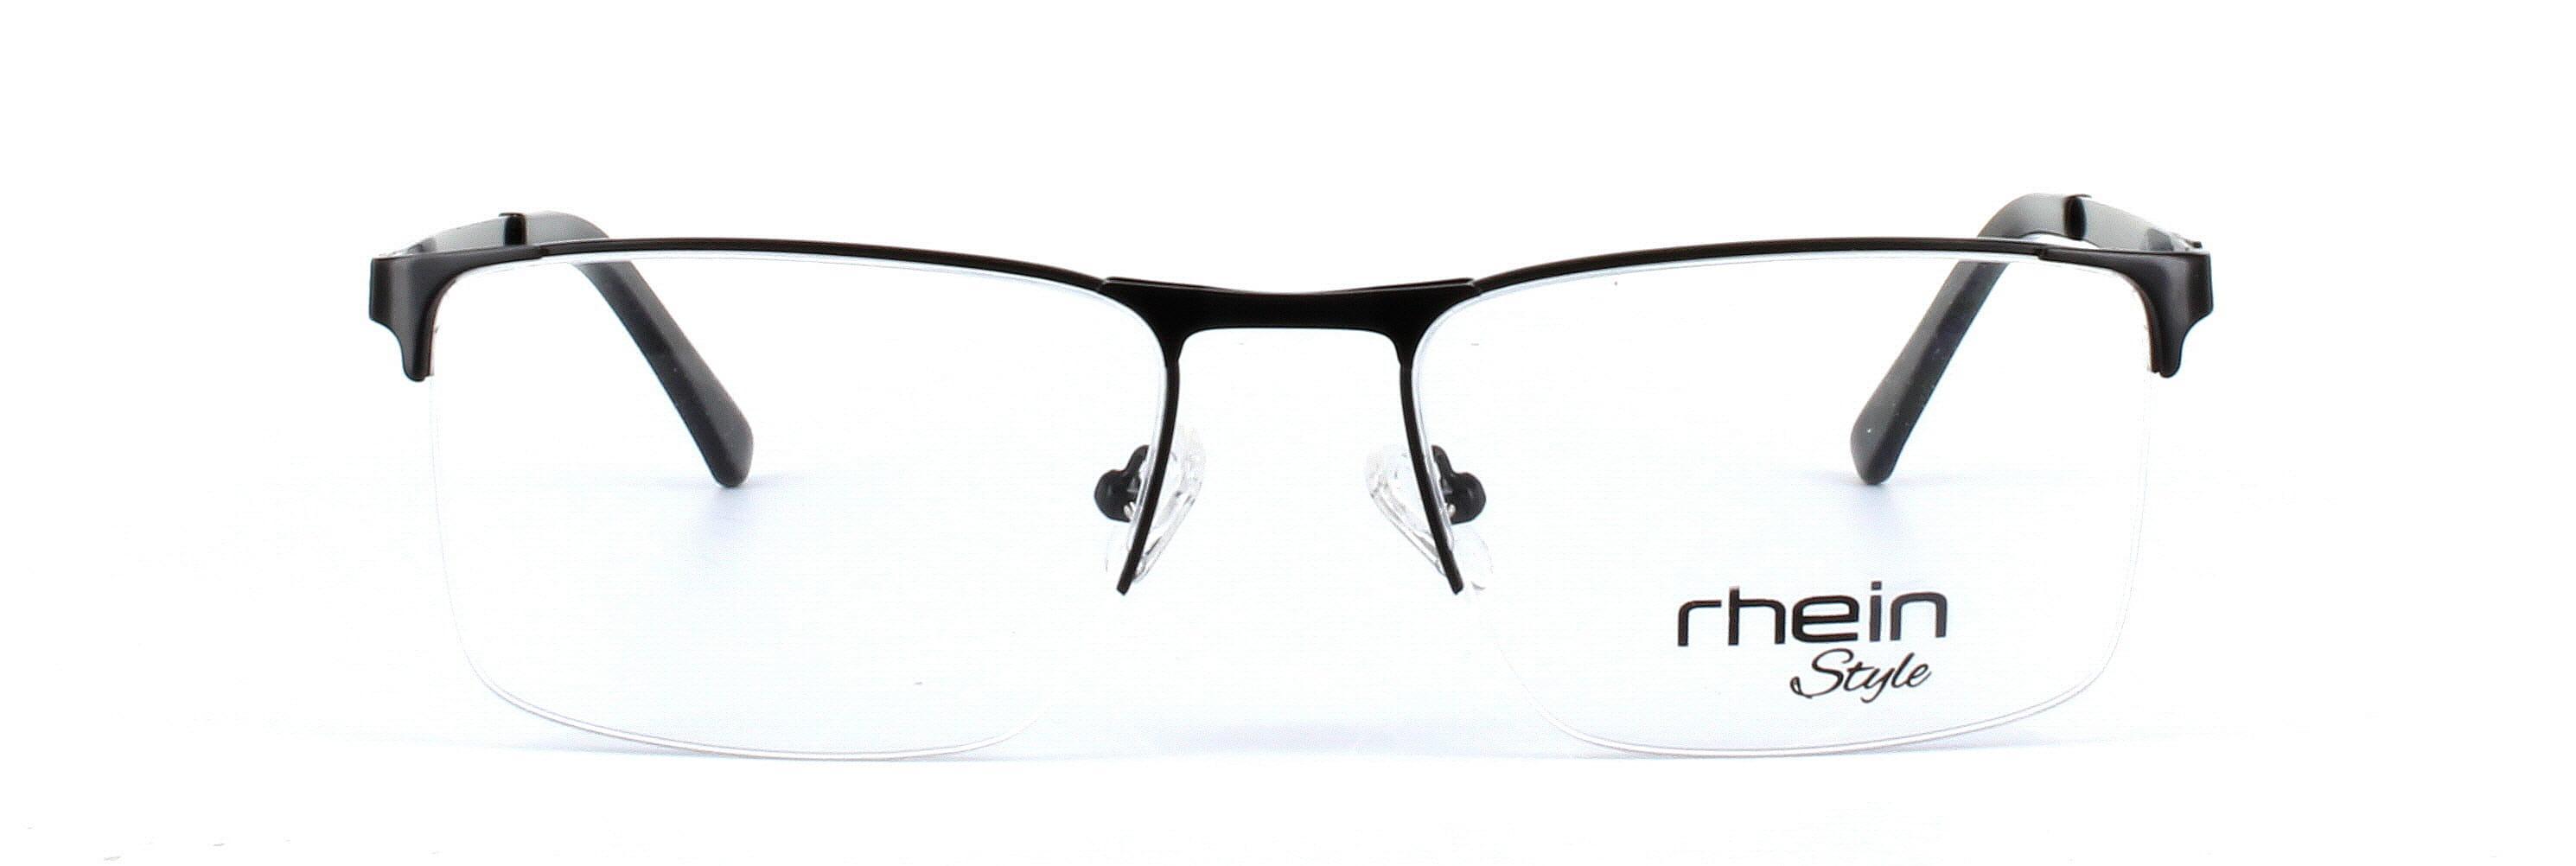 Mansell Matt Black Semi Rimless Rectangular Metal Glasses - Image View 5